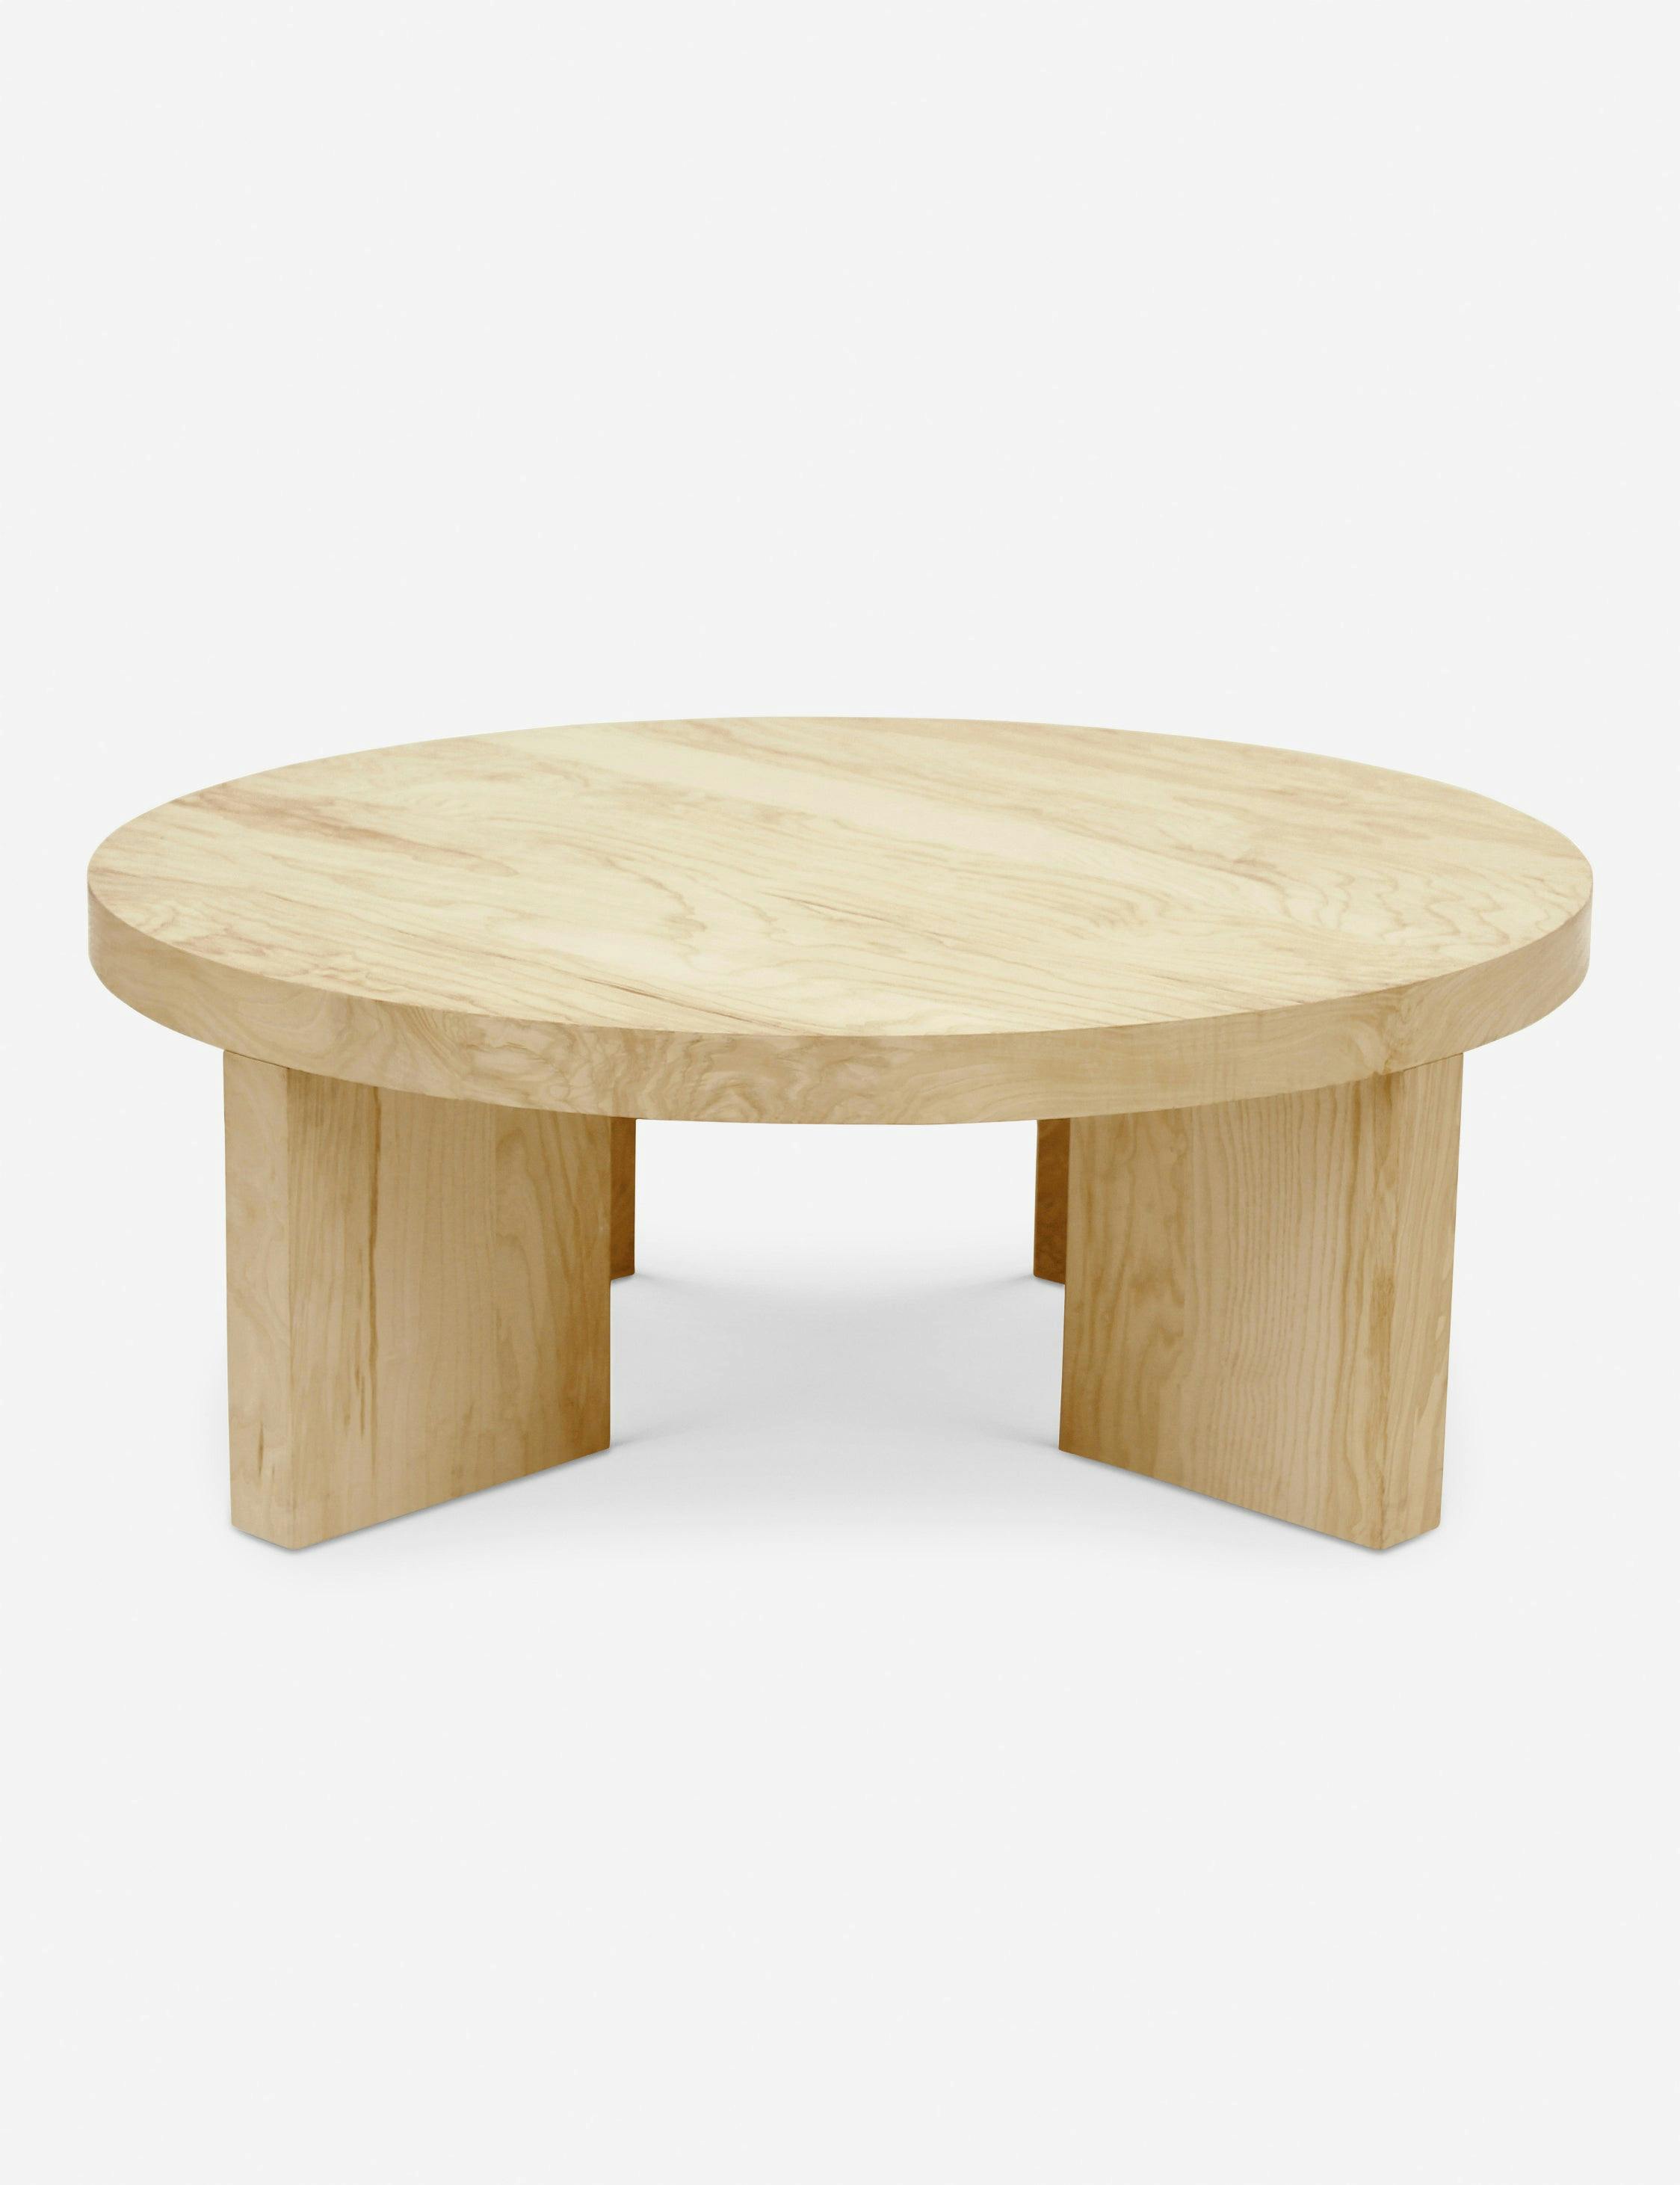 Kearns Round Burl Wood Coffee Table - Natural